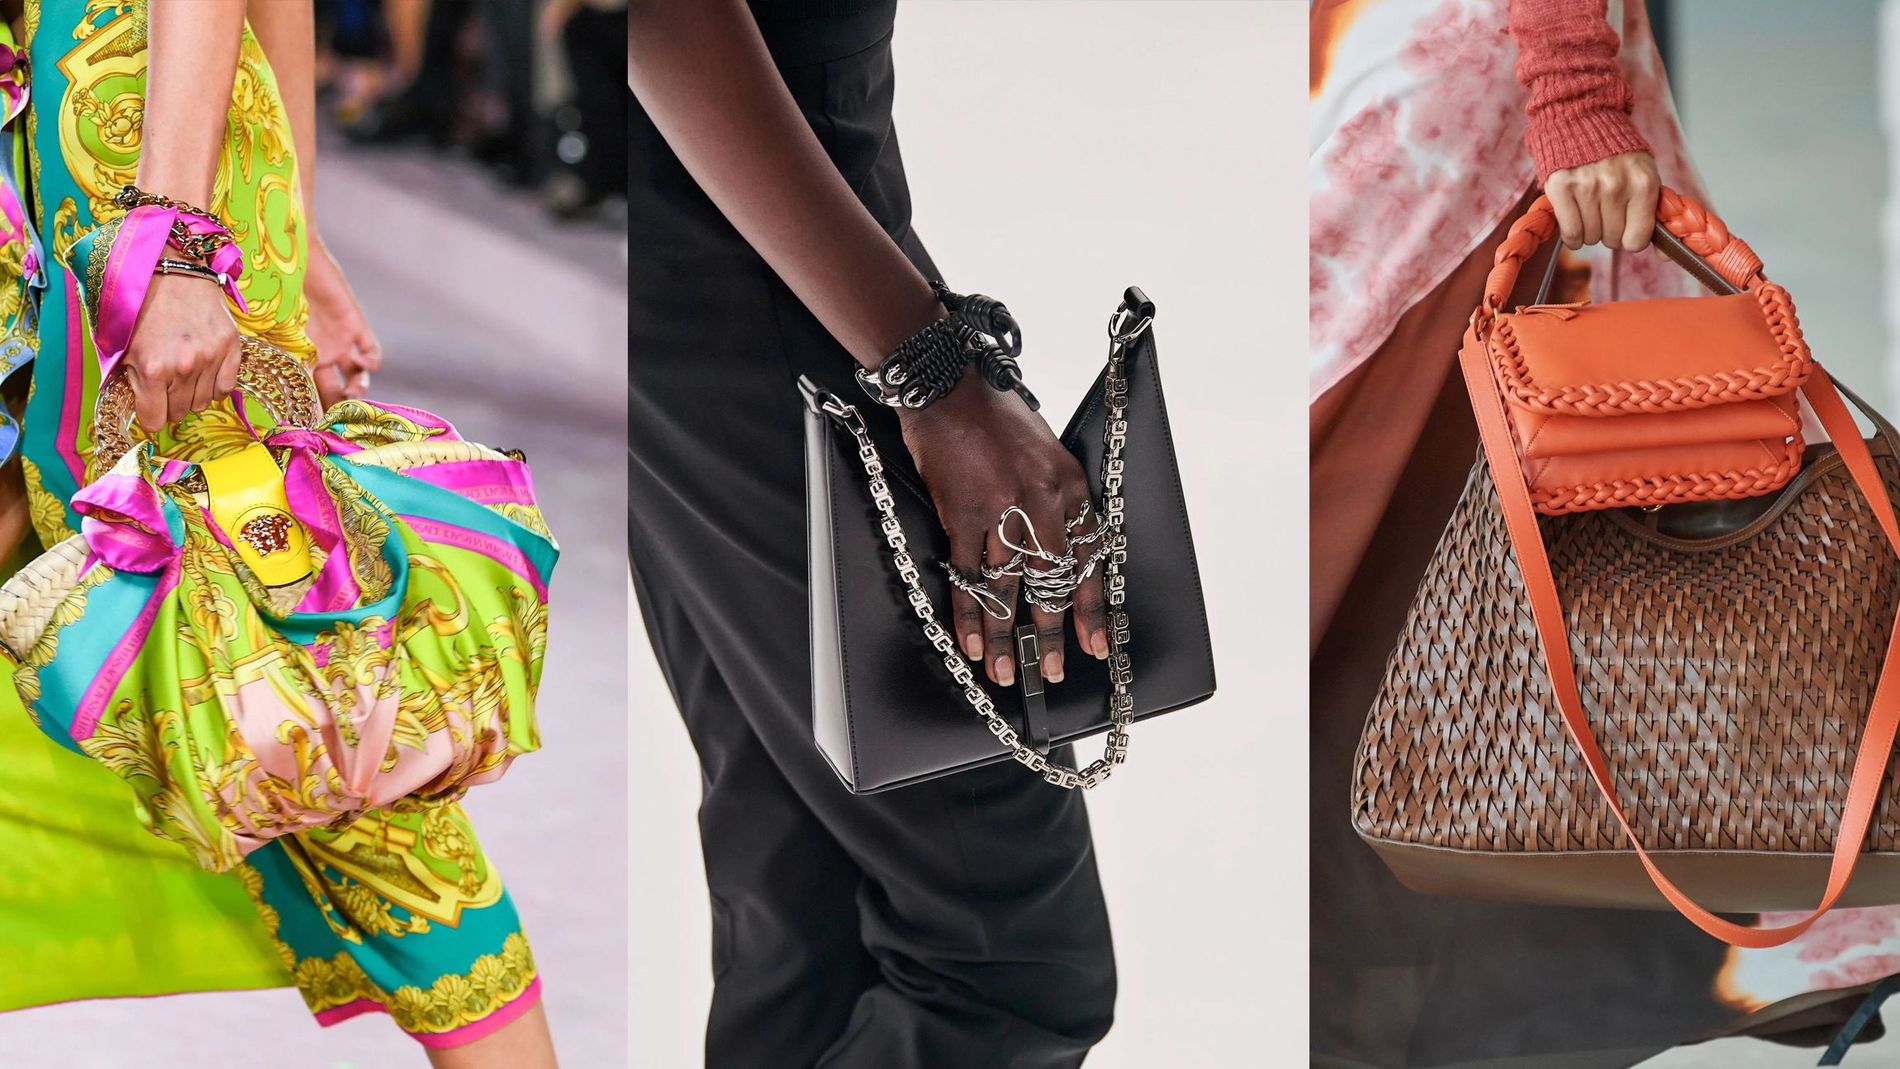 Best Handbag Trends to Shop Spring/Summer 2021